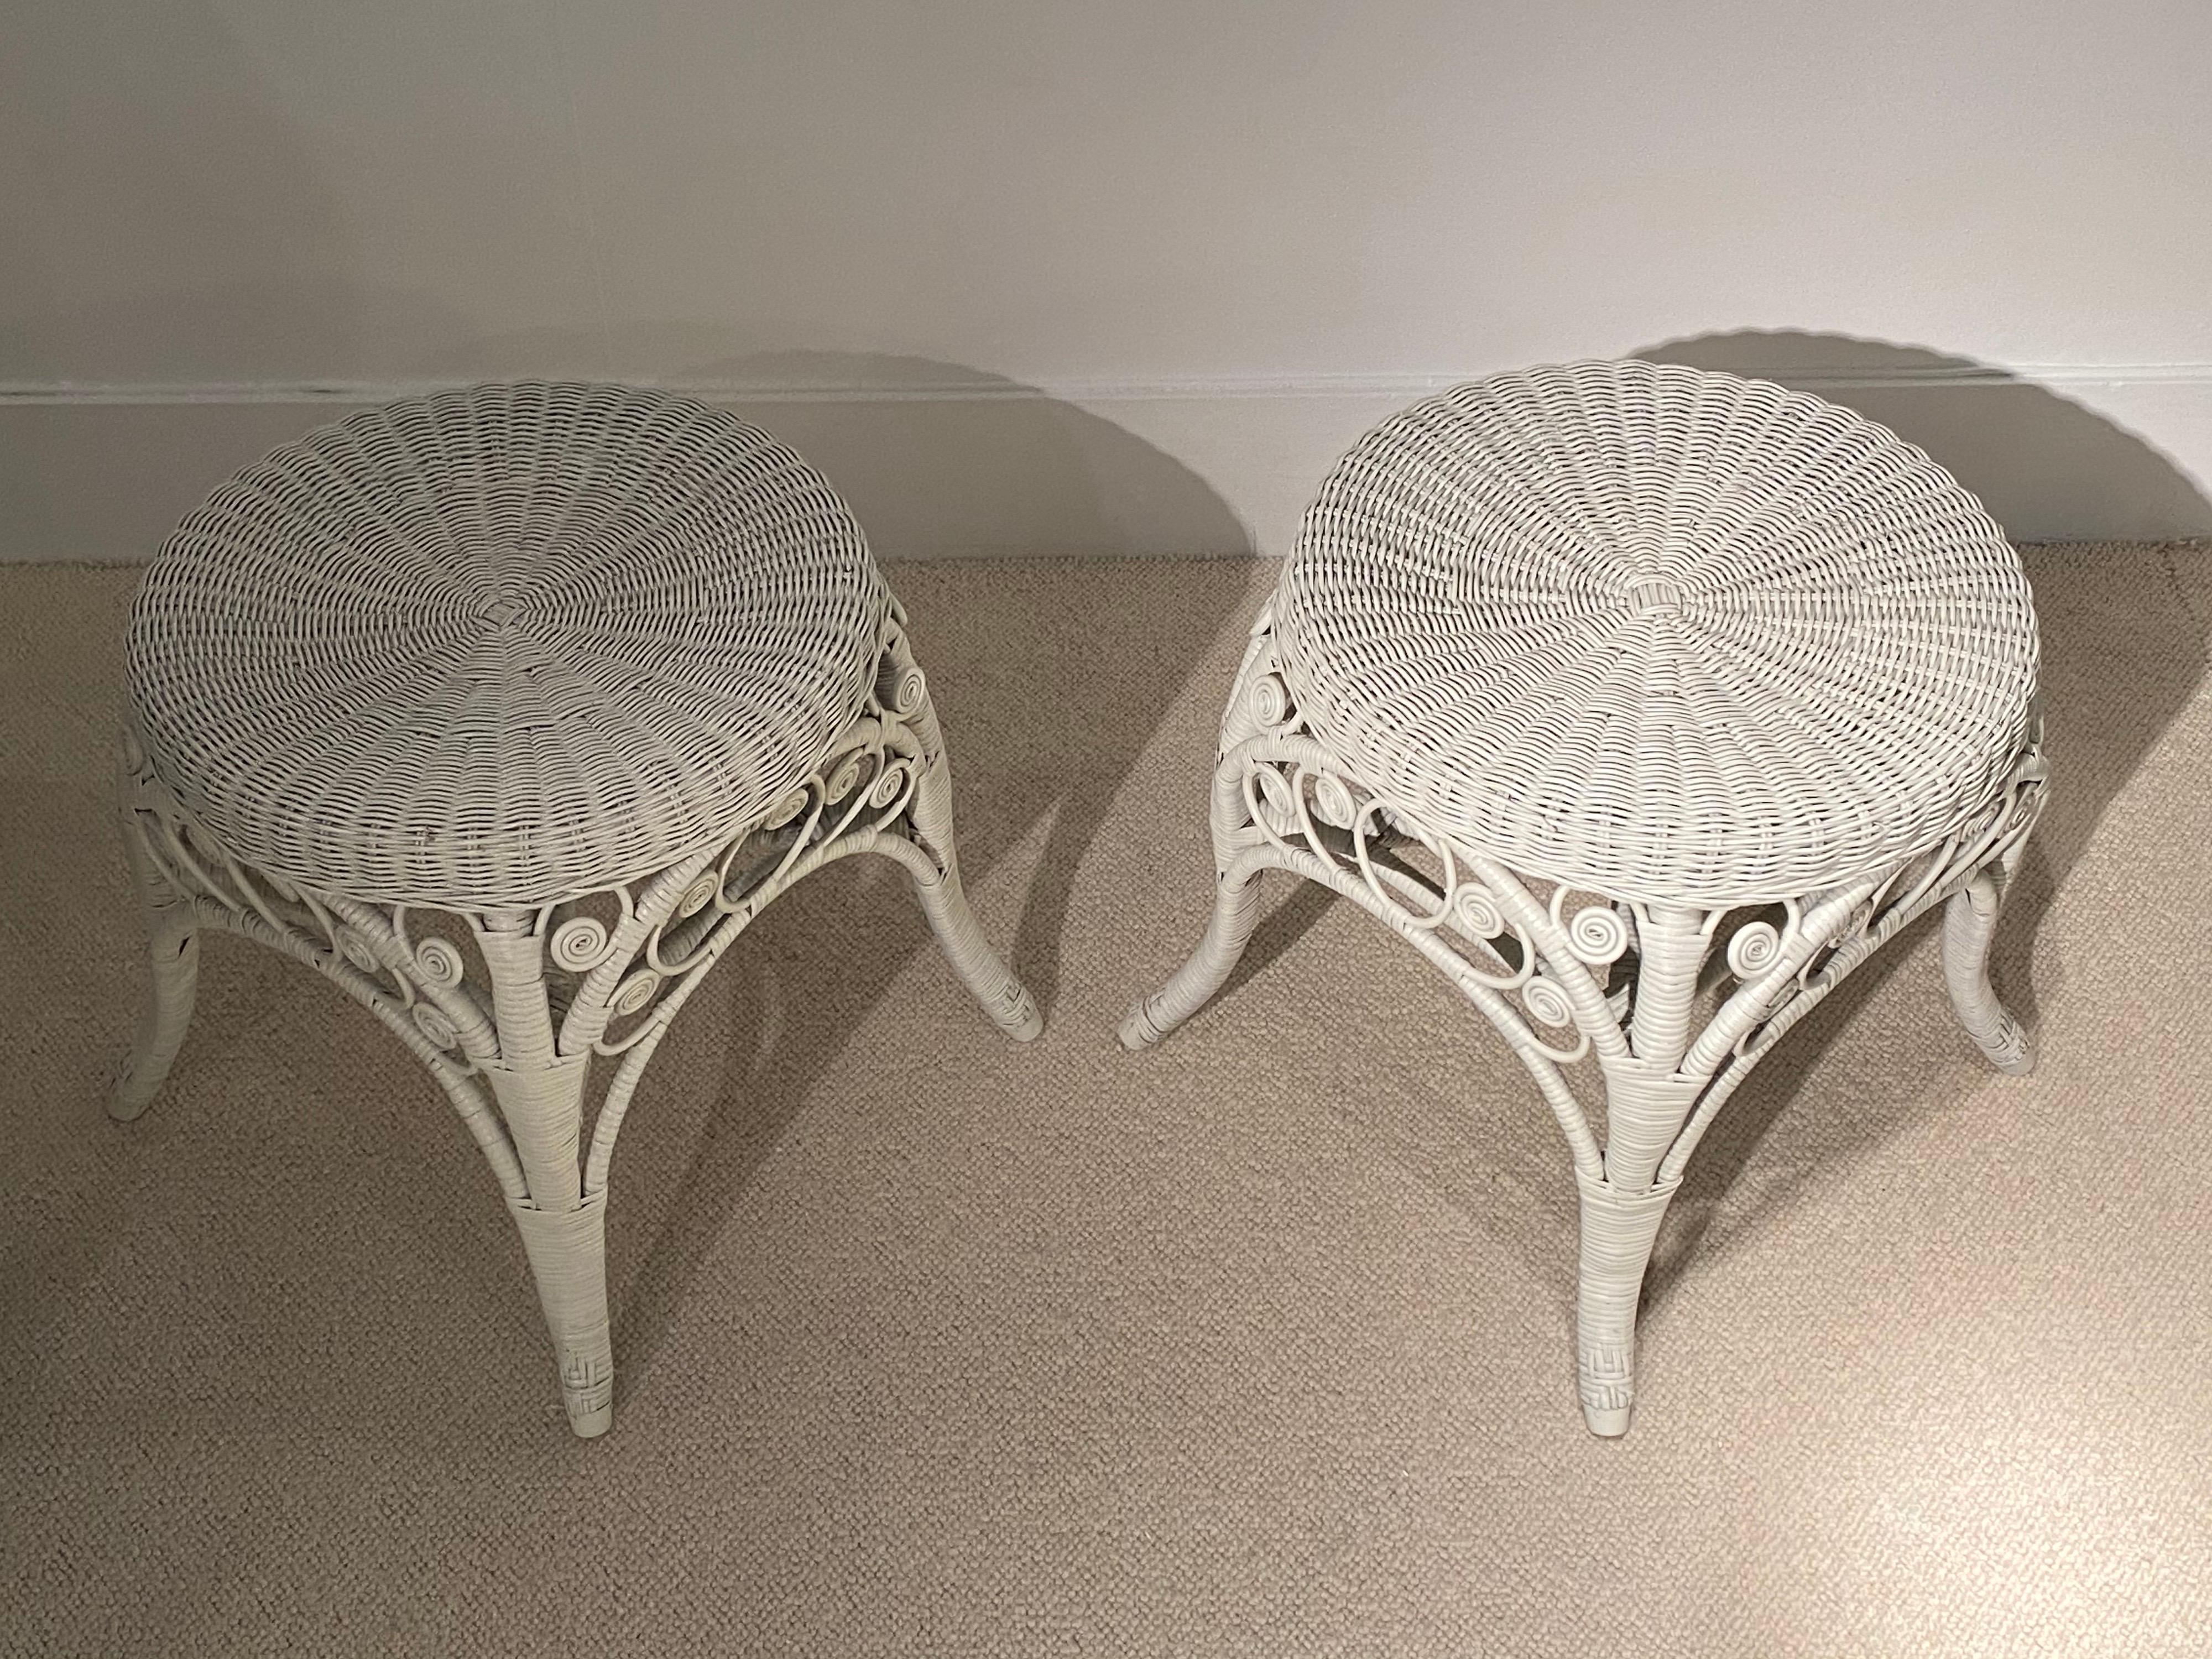 Pair of white rattan vintage stools
good condition.